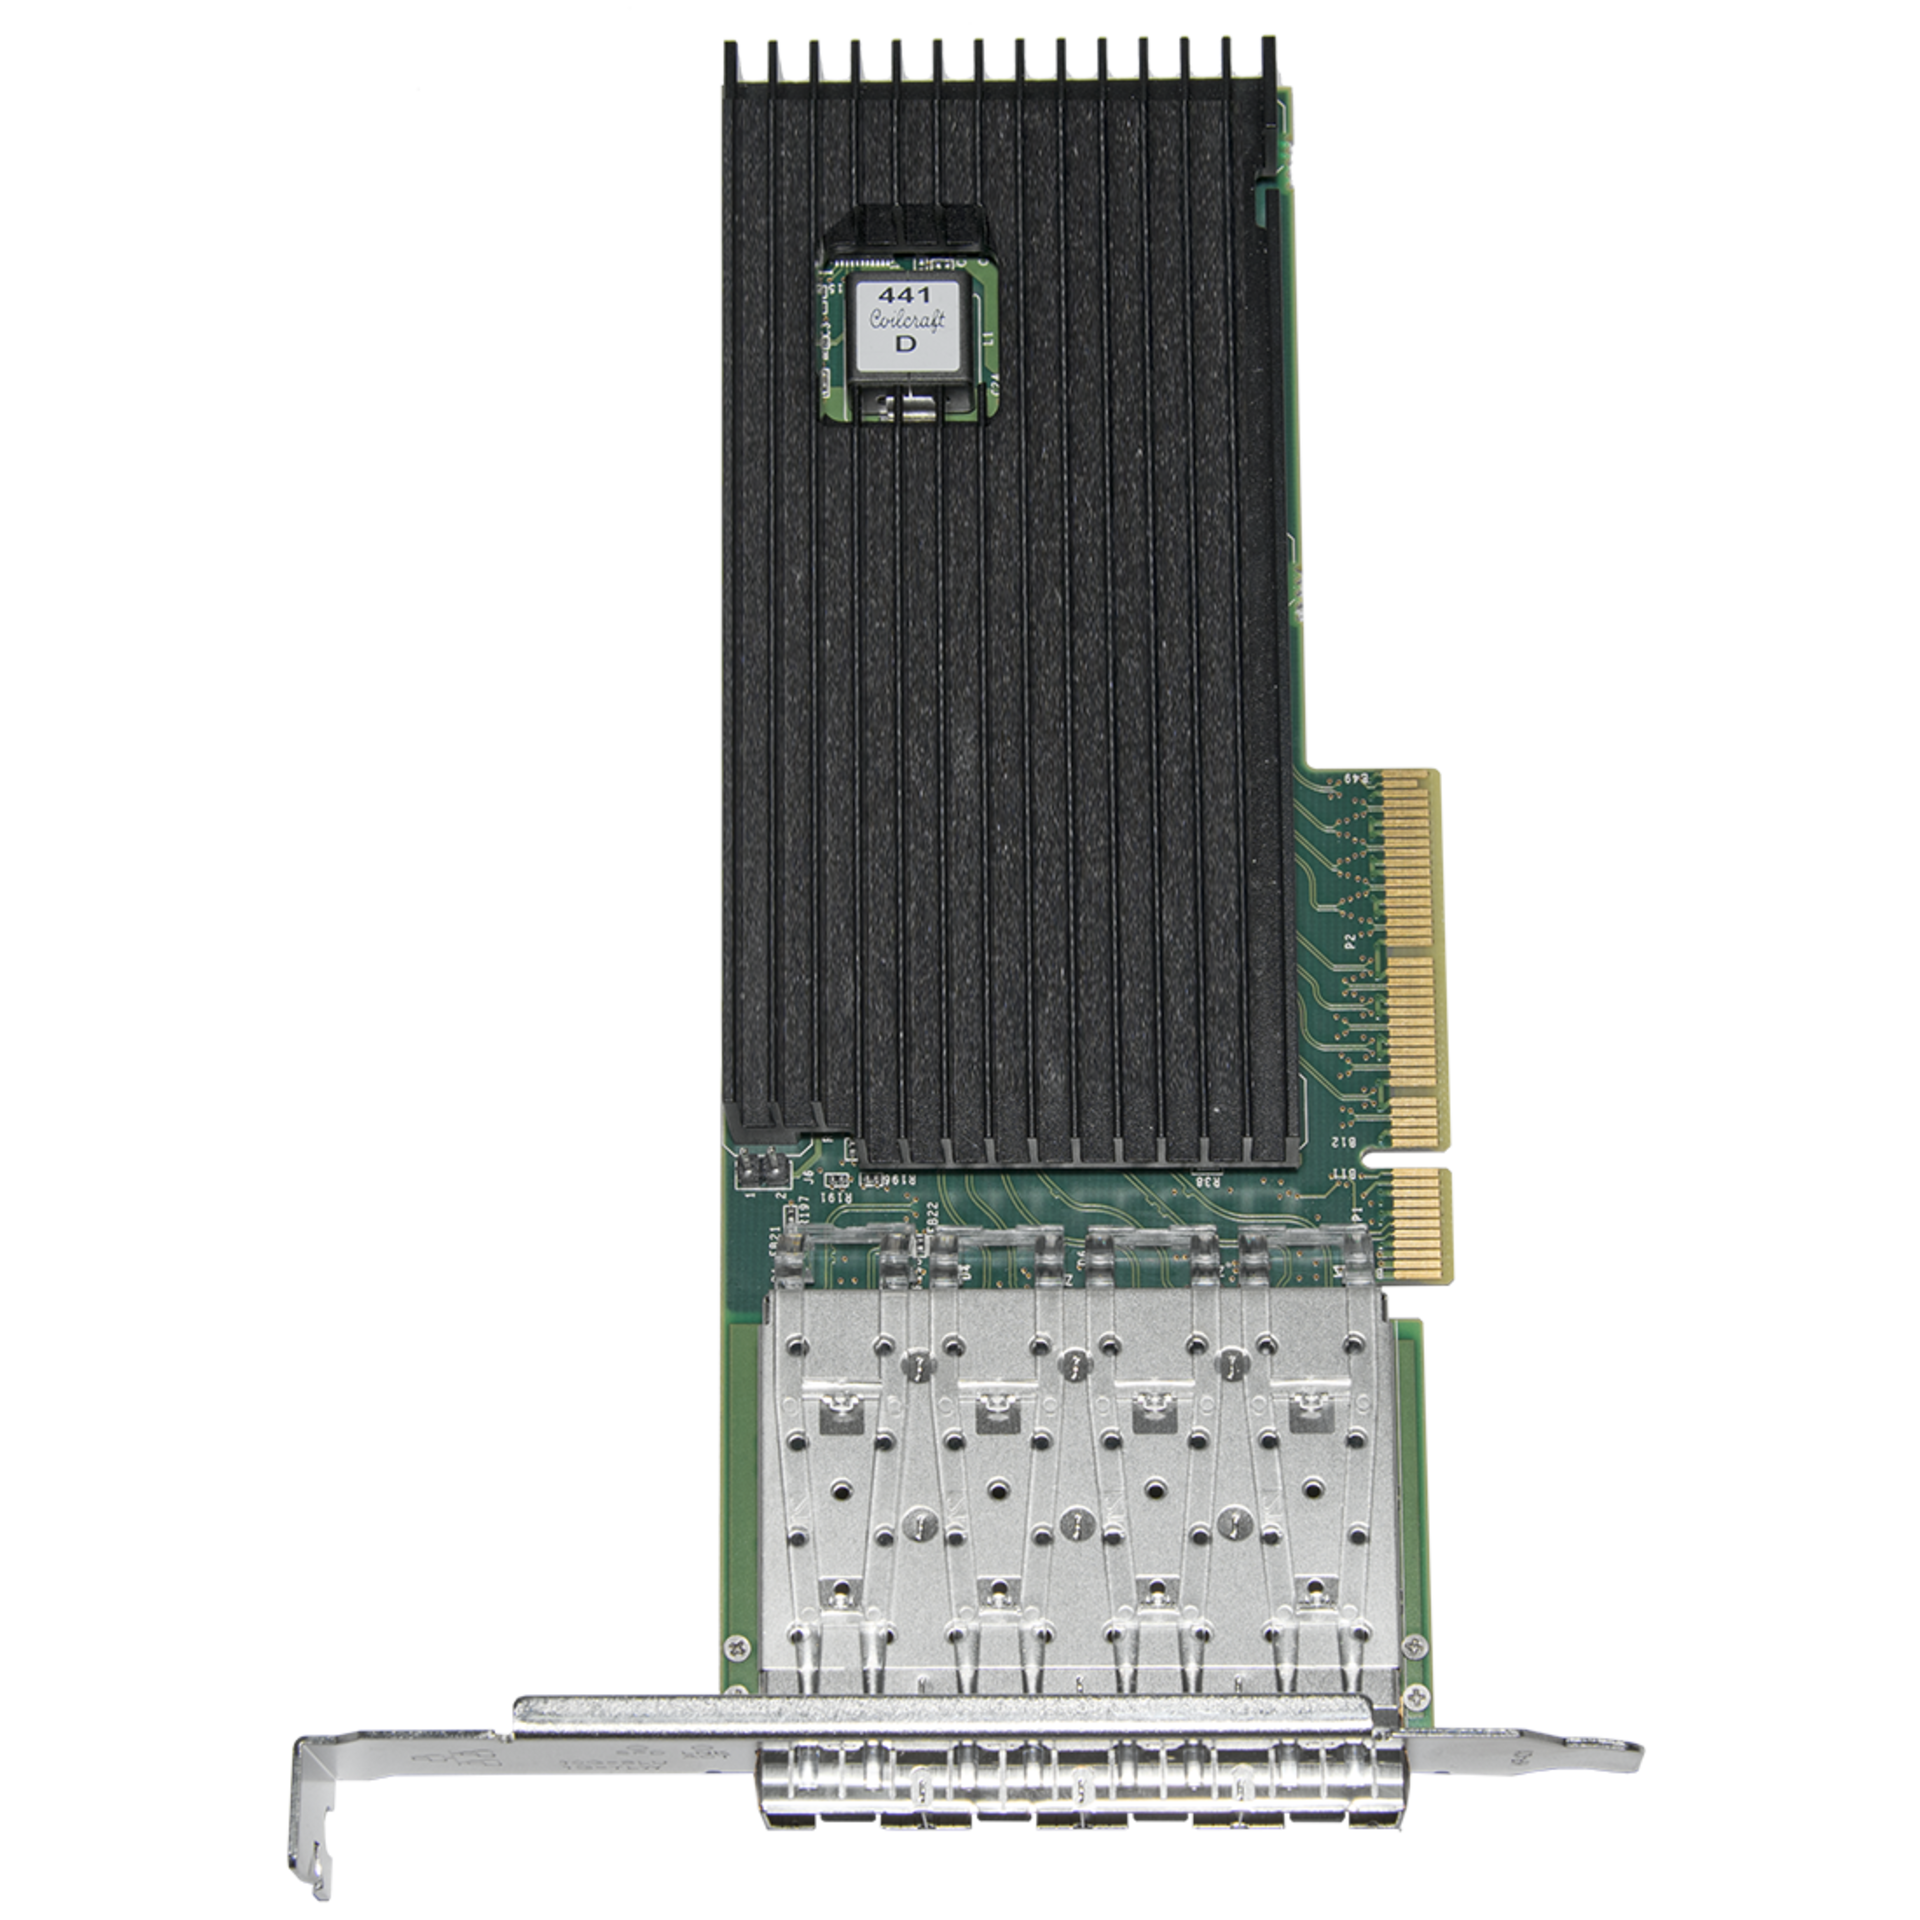 Сетевая карта 4 порта 10GBase-X (SFP+, Intel FTXL710AM1), Silicom PE310G4i71LB-XR